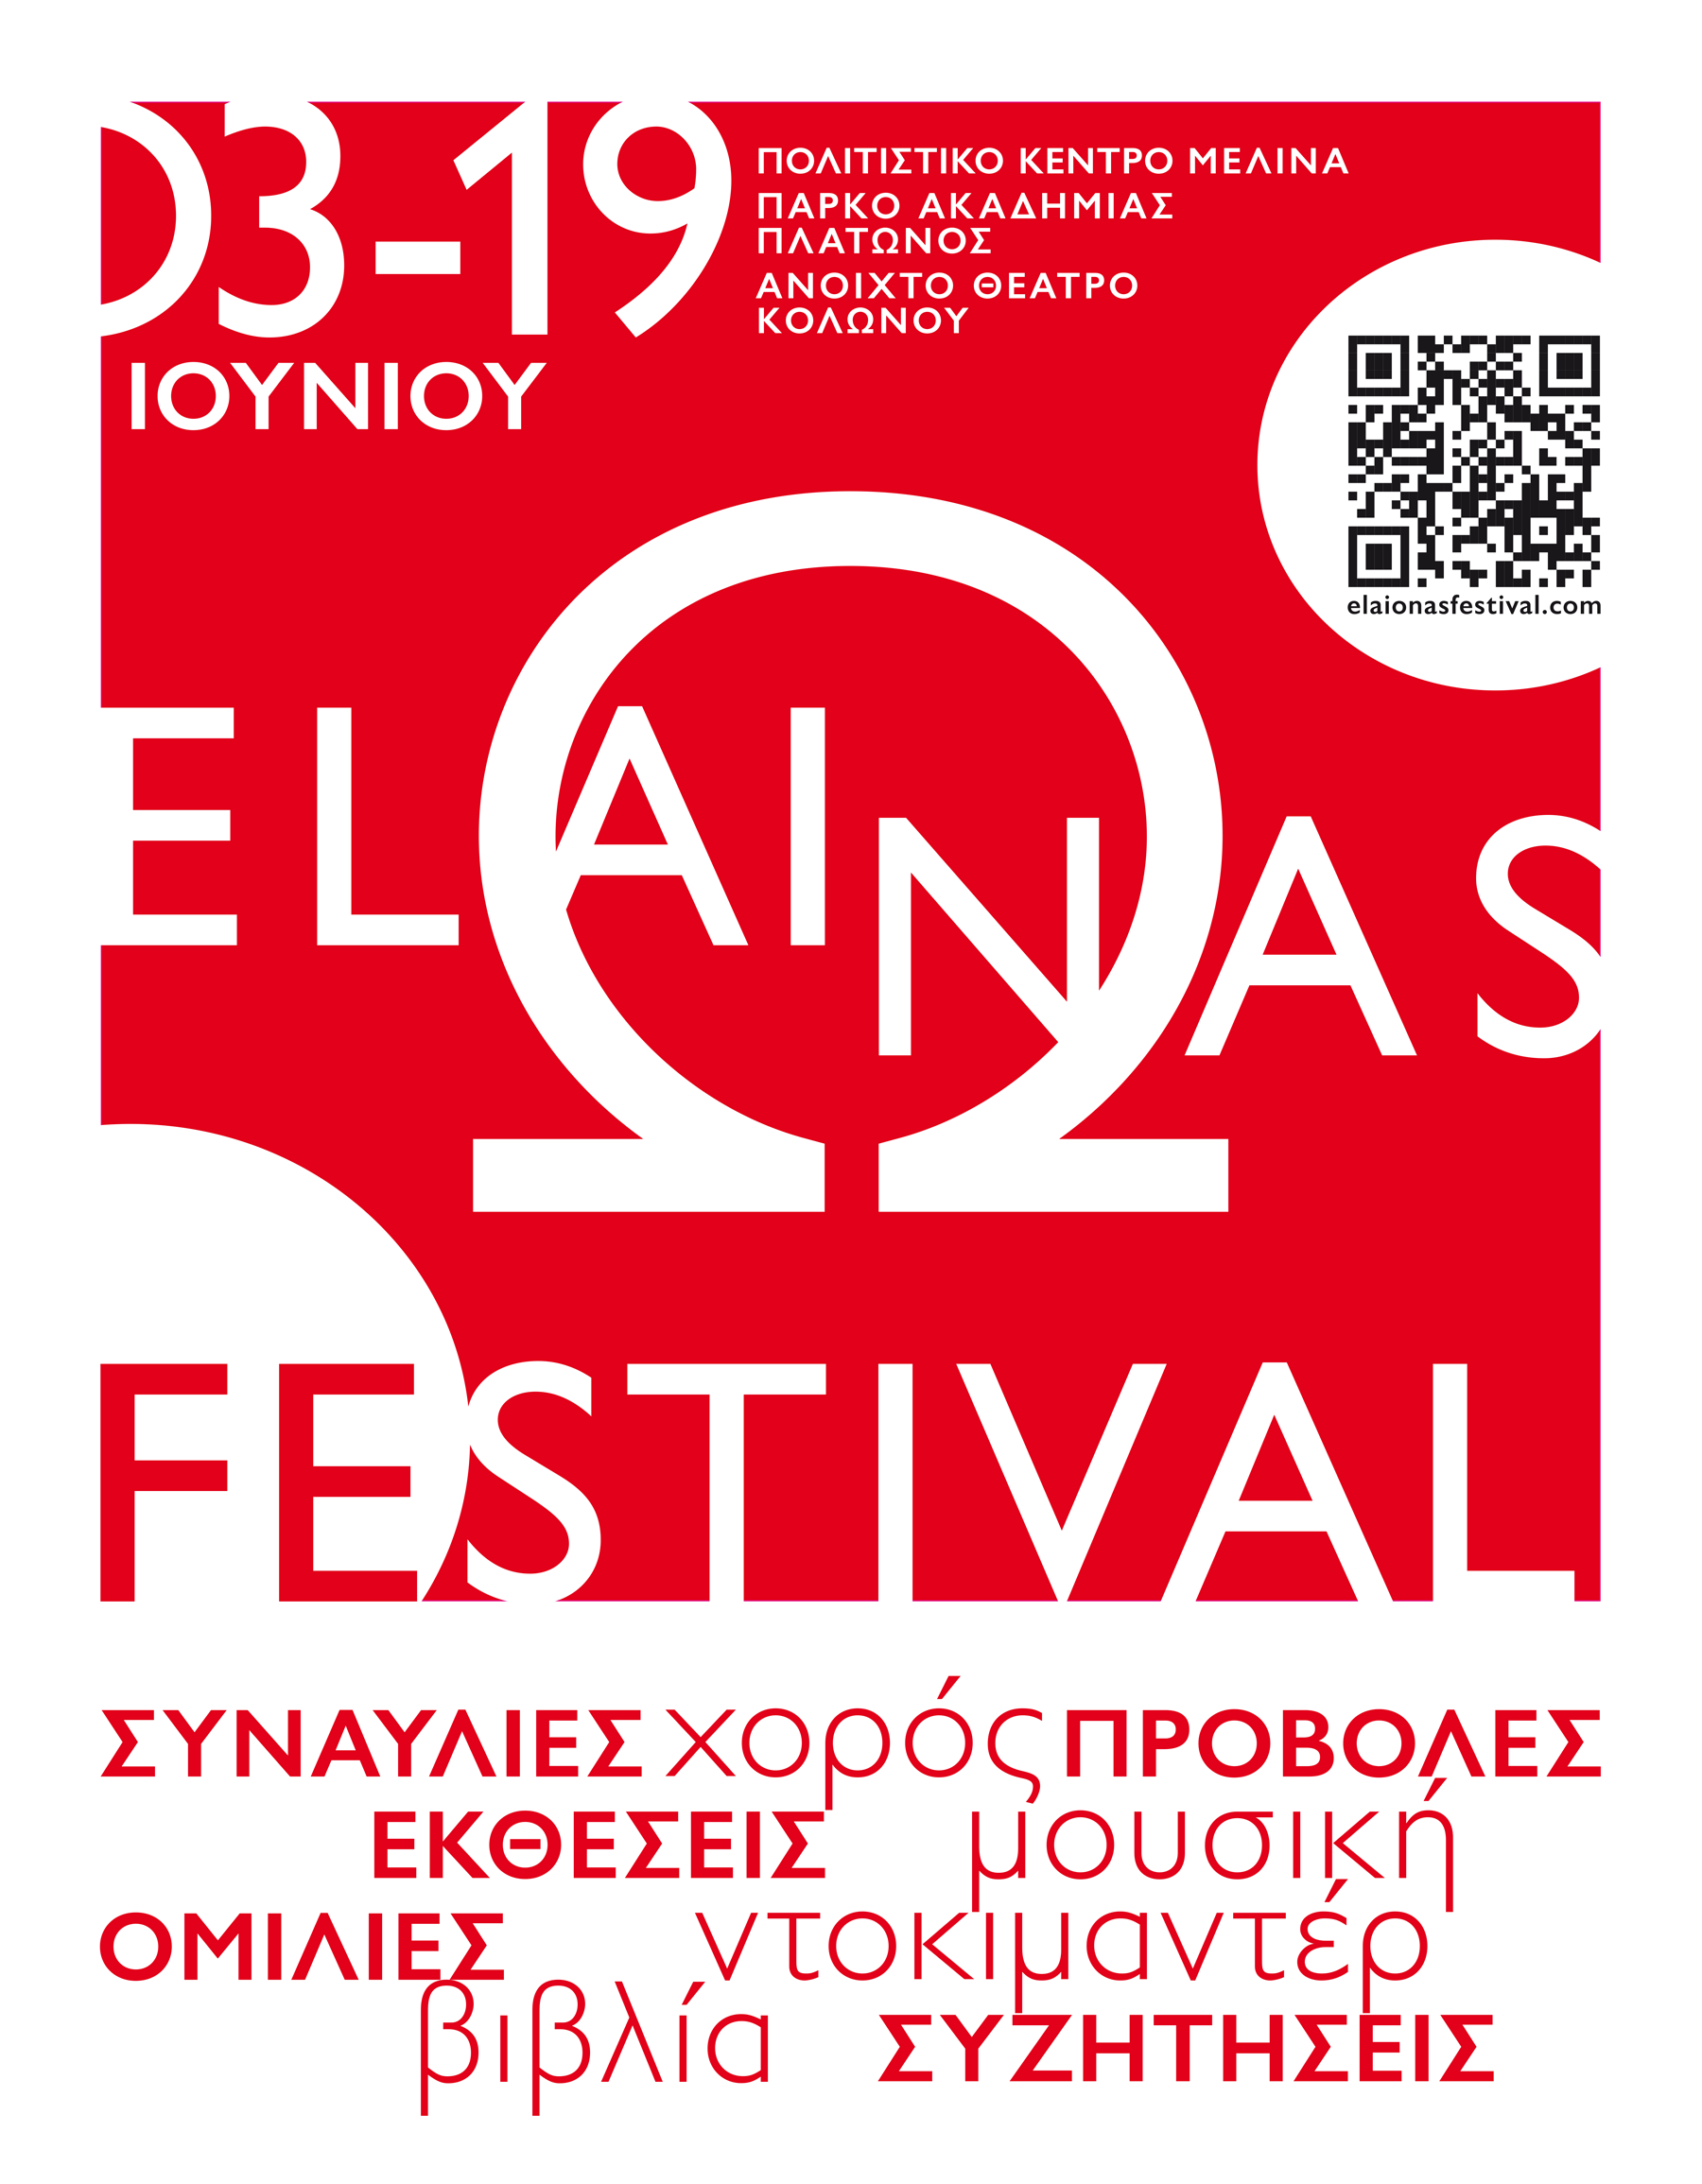 elaiΩnas festival / 3-19 Ιουνίου